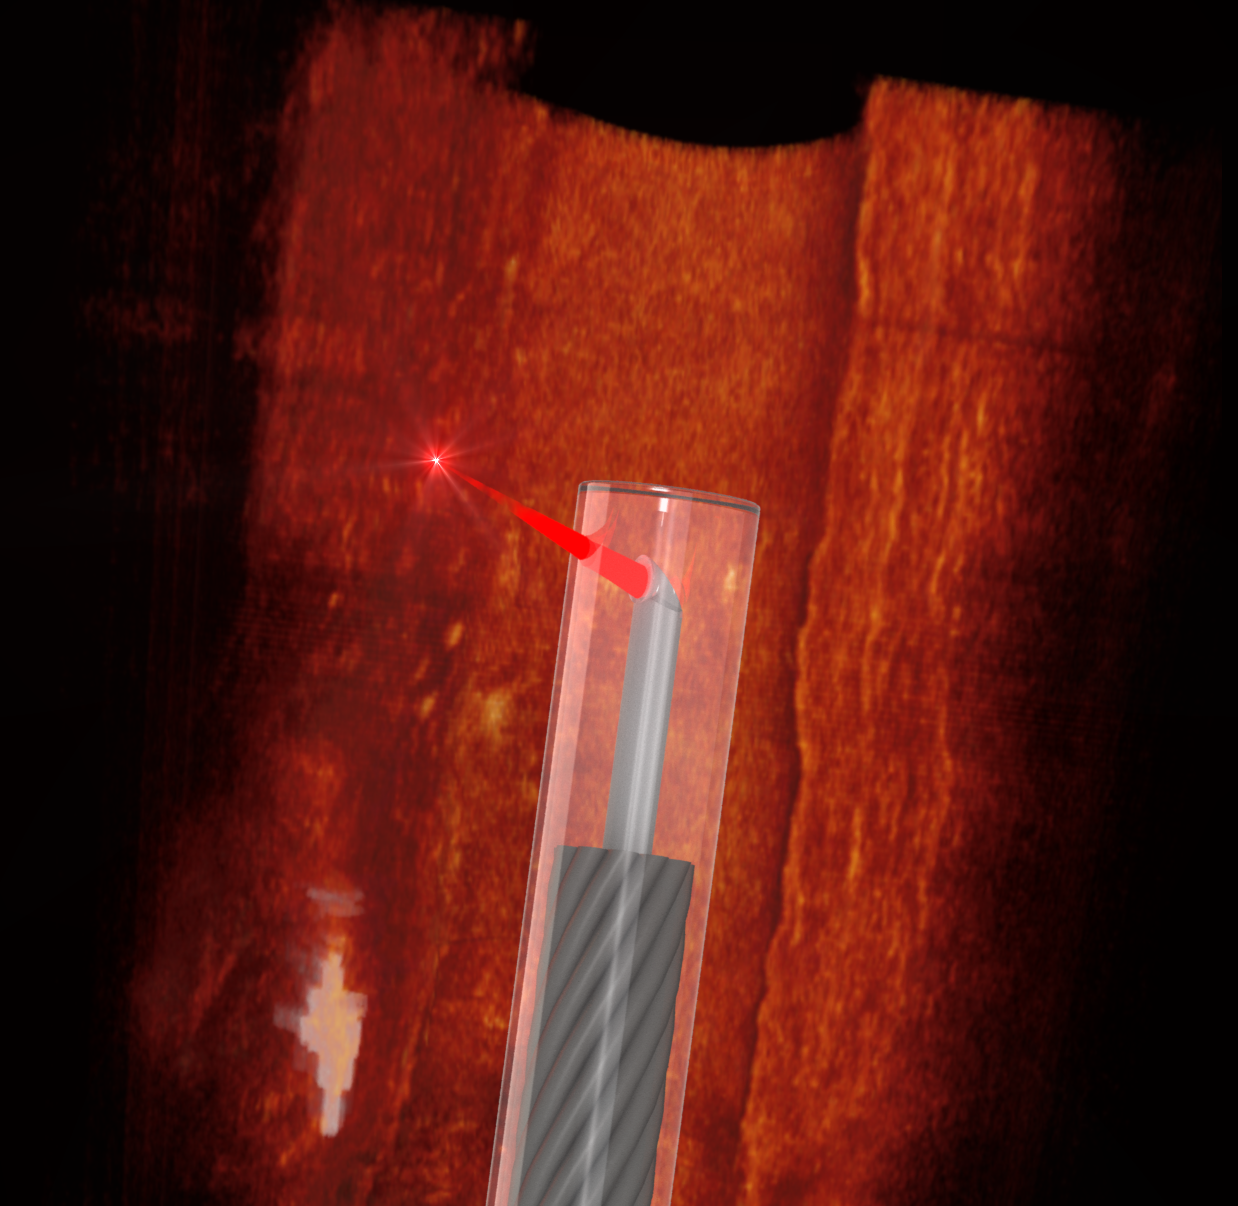 Ultrathin 3D printed endoscope imaging an artery_credit_ Simon Thiele and Jiawen Li